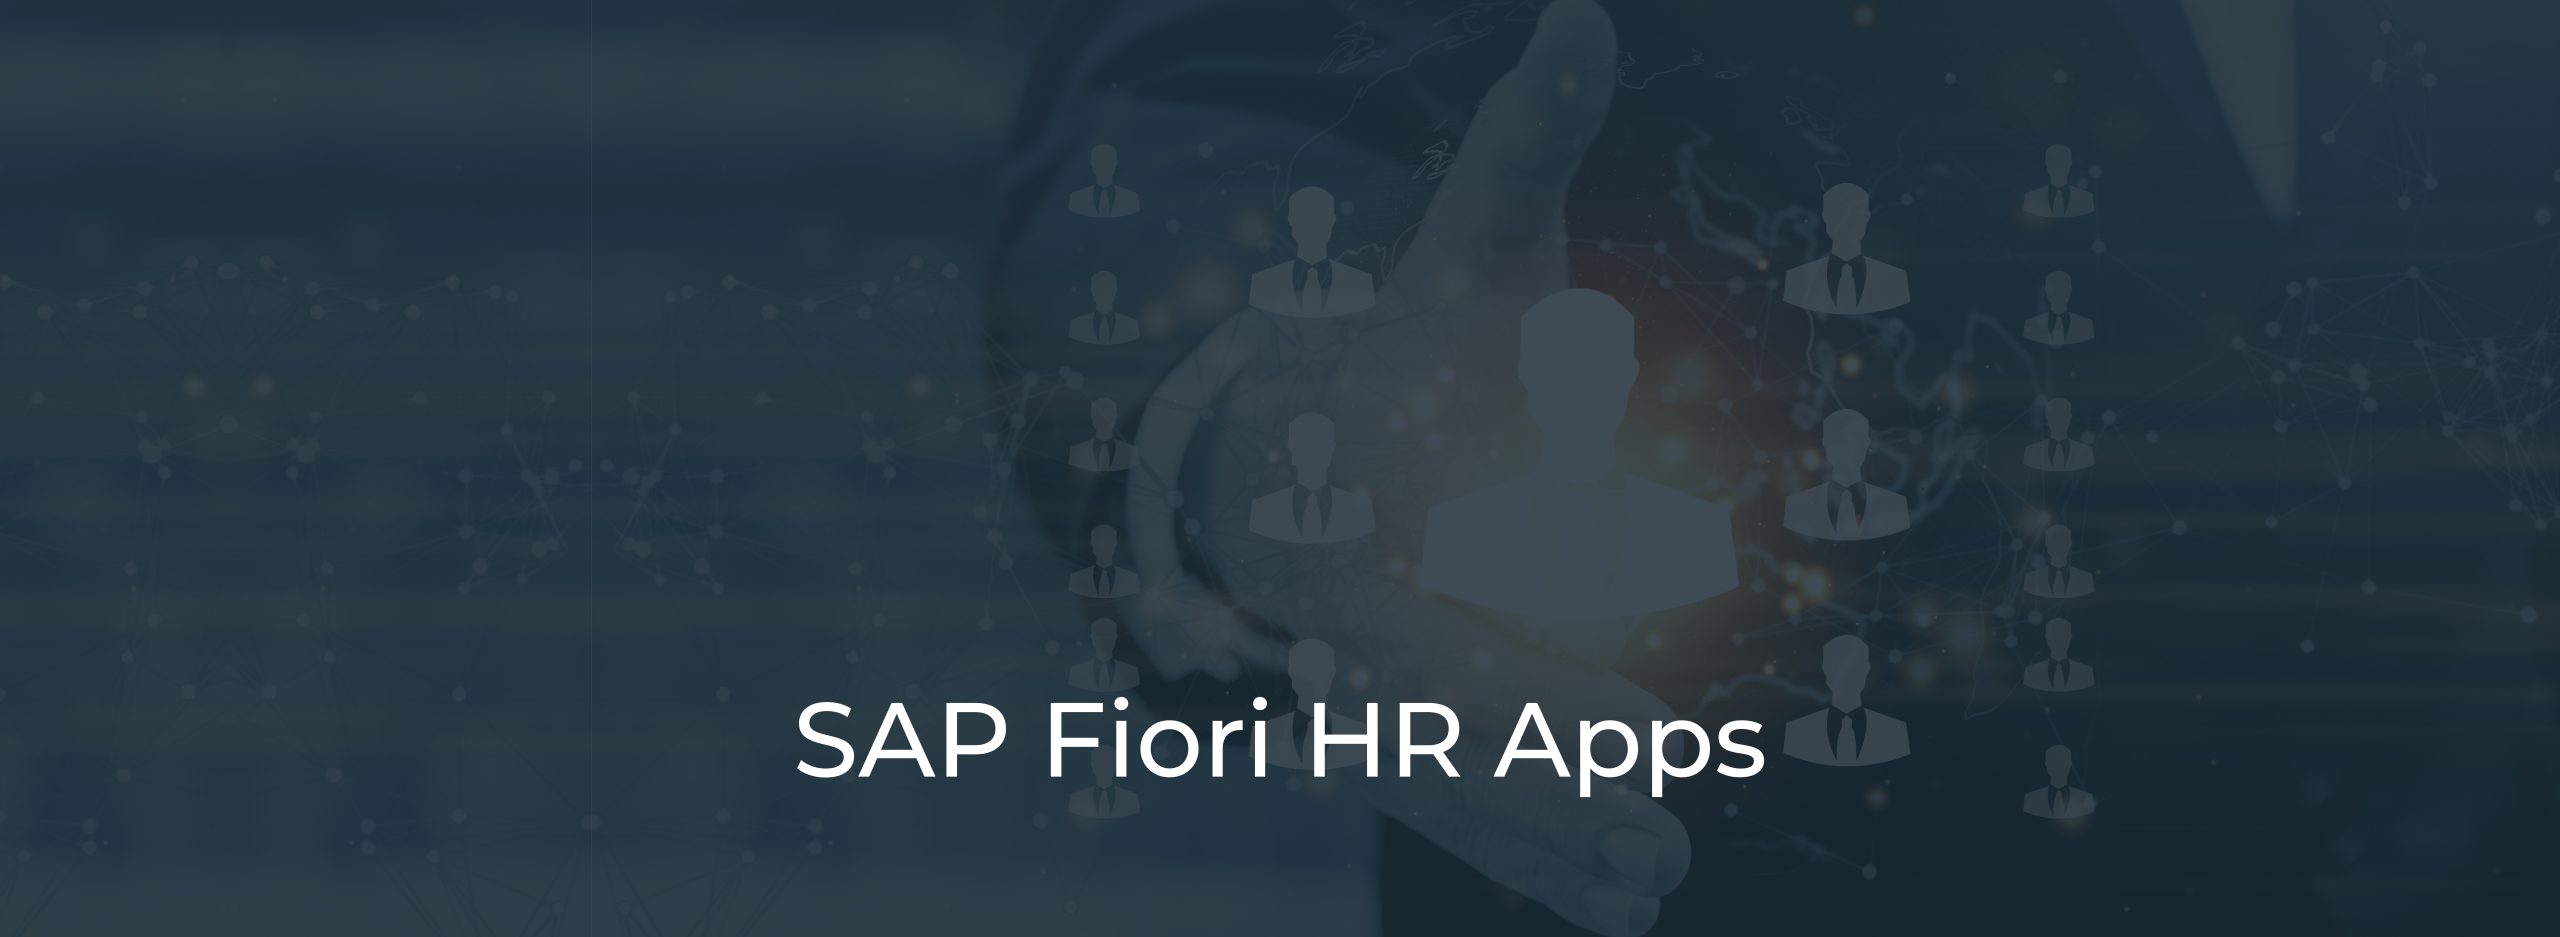 SAP Fiori HR Apps banner